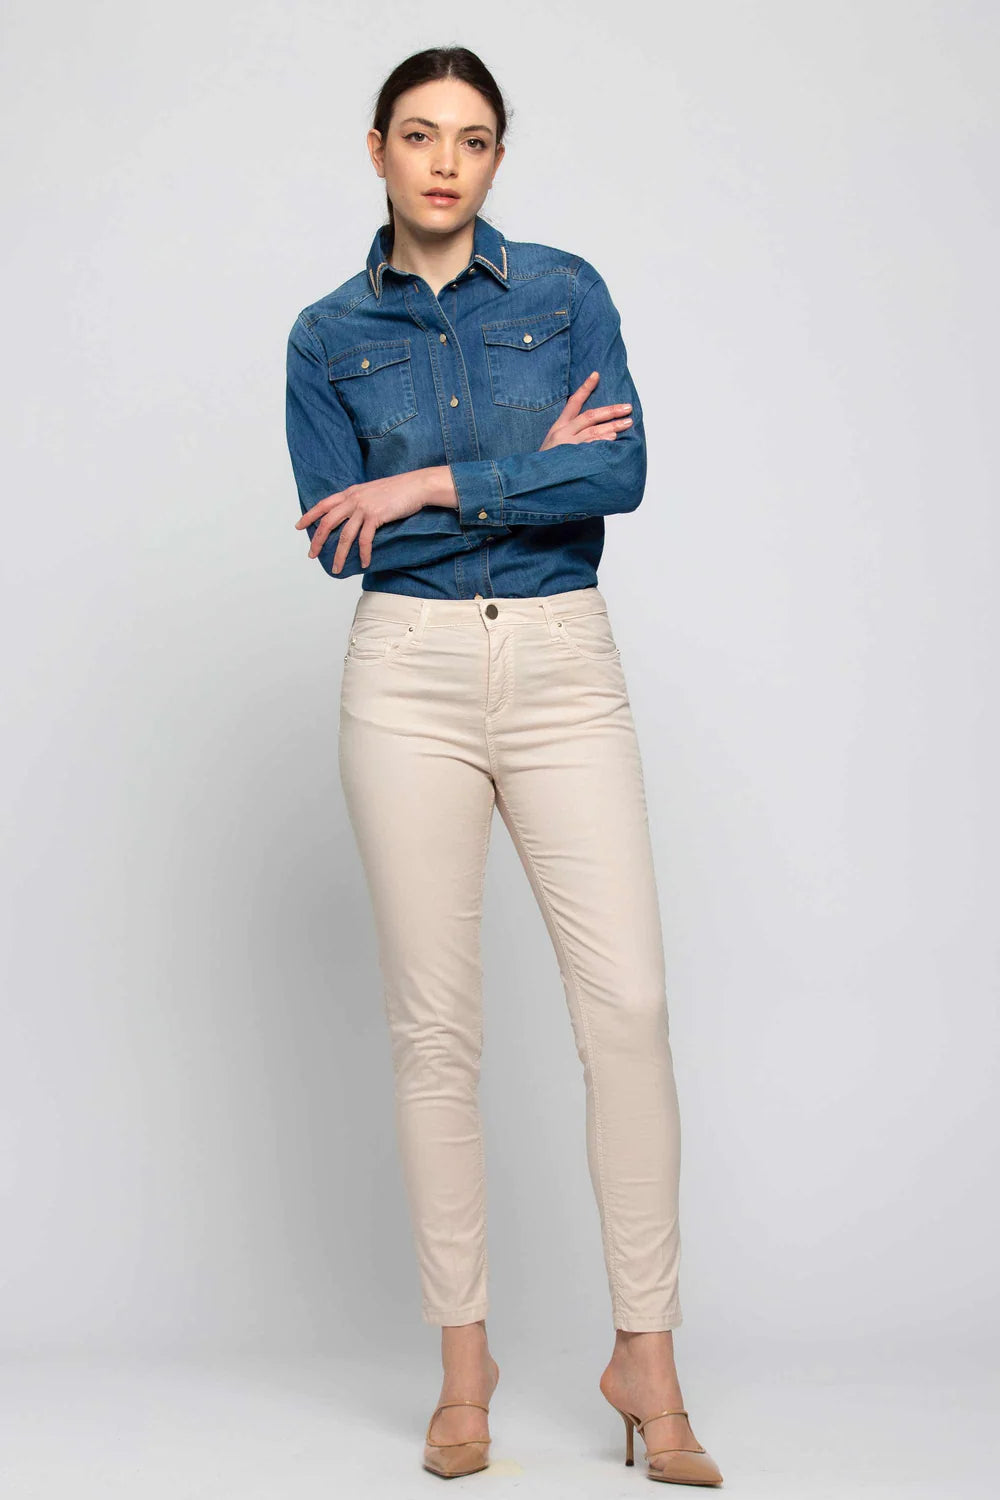 Camicia in Denim Kocca / Jeans - Ideal Moda